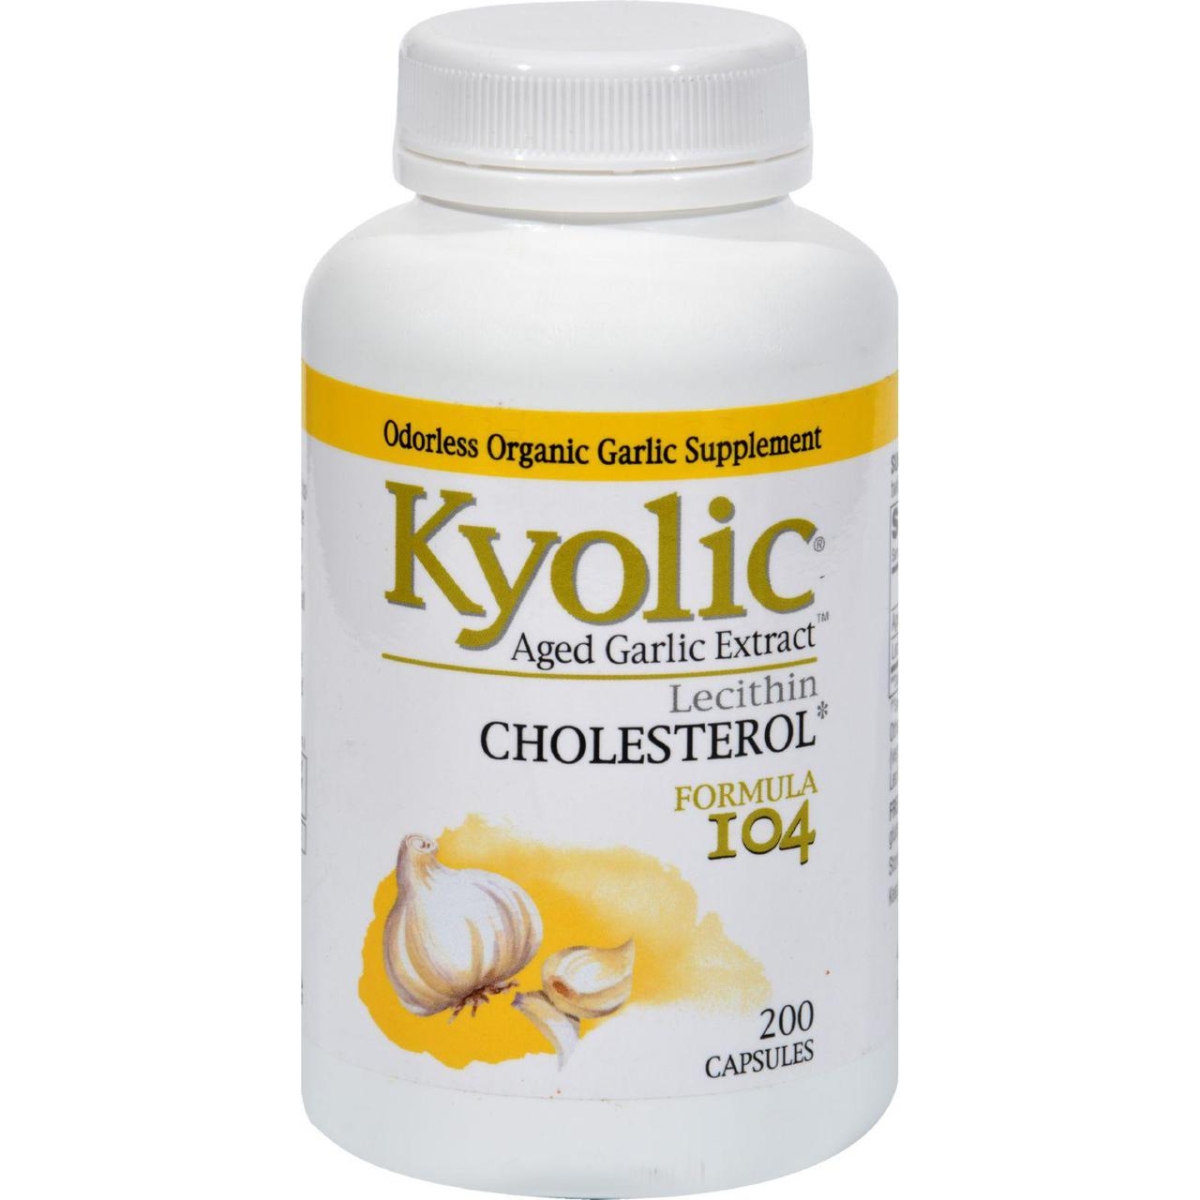 Hg0171009 Aged Garlic Extract Cholesterol Formula 104, 200 Capsules